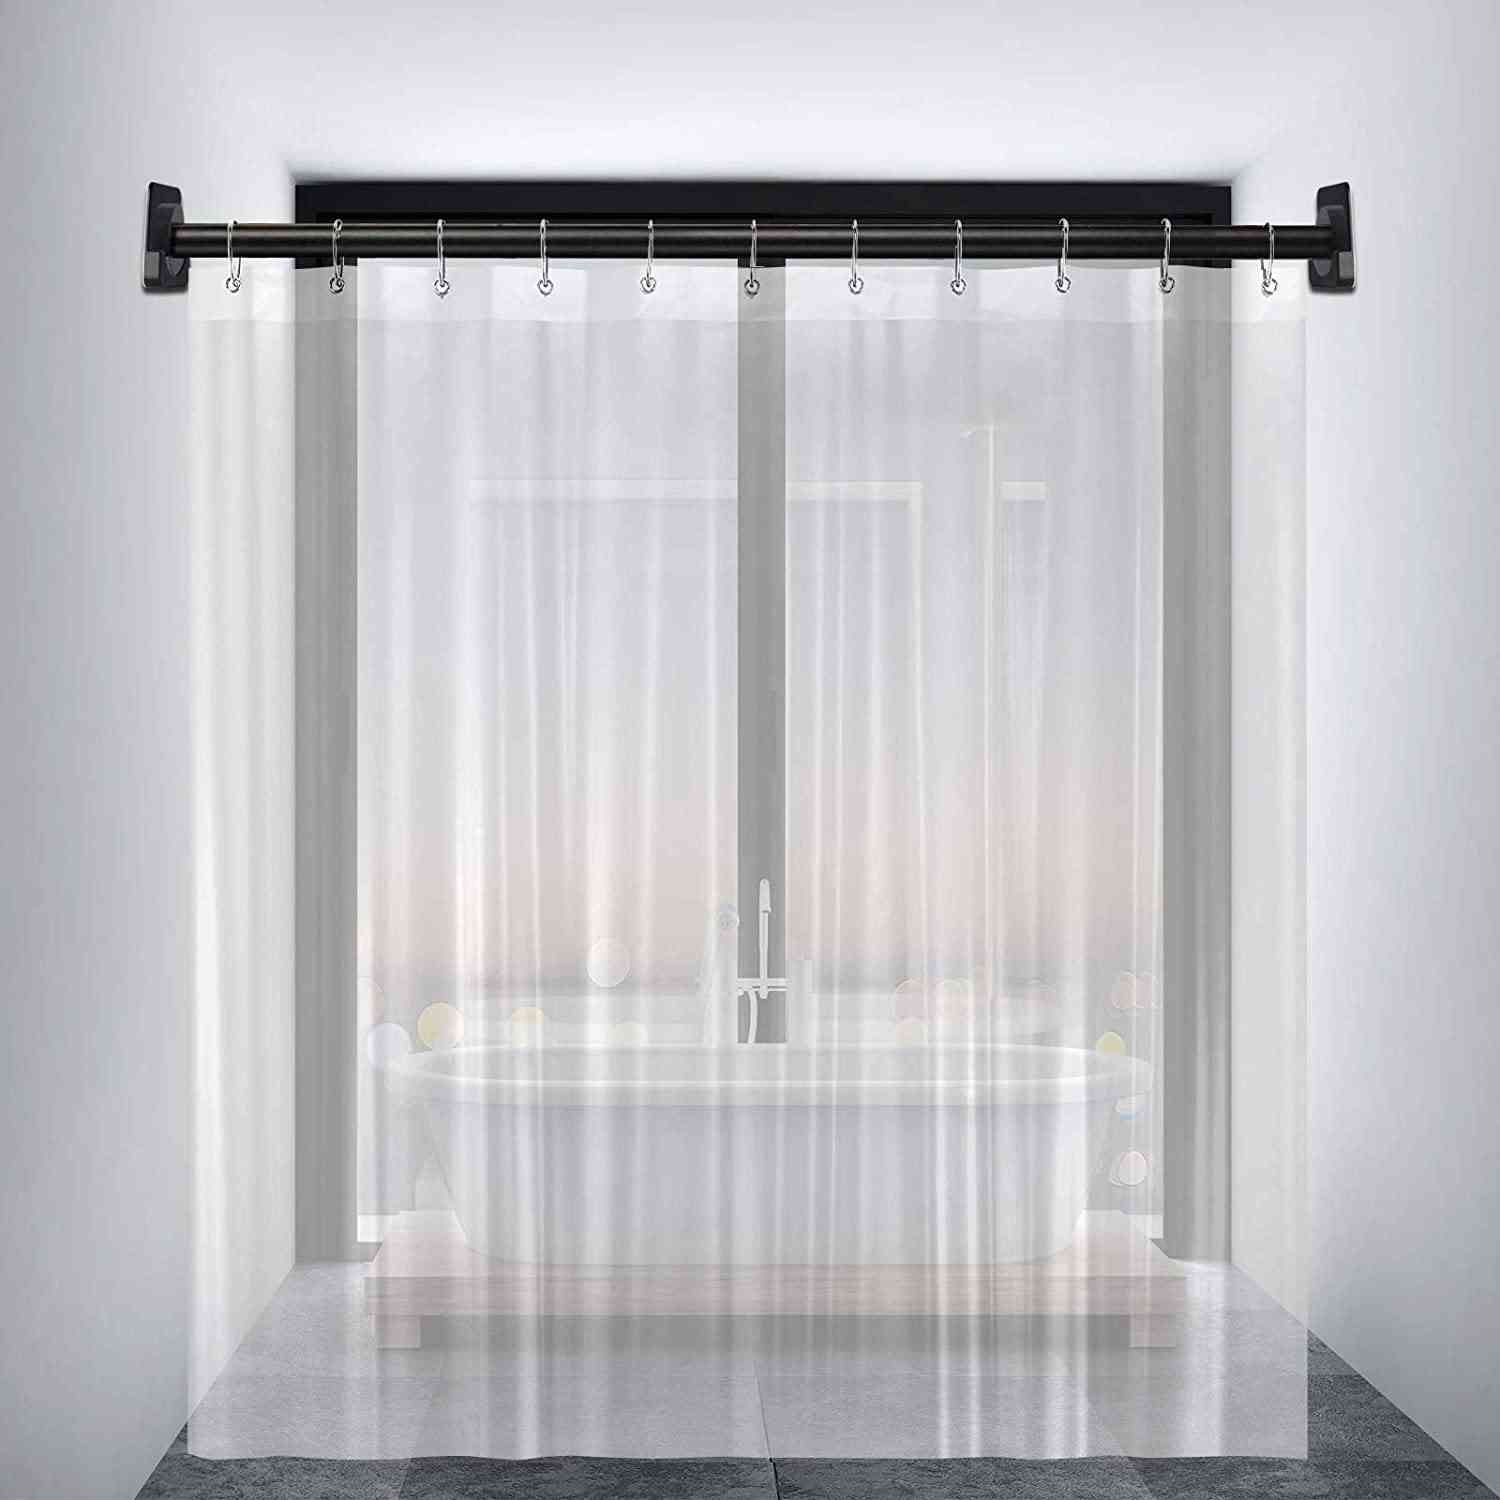 Universal Shower Curtain Rod Mount Holder